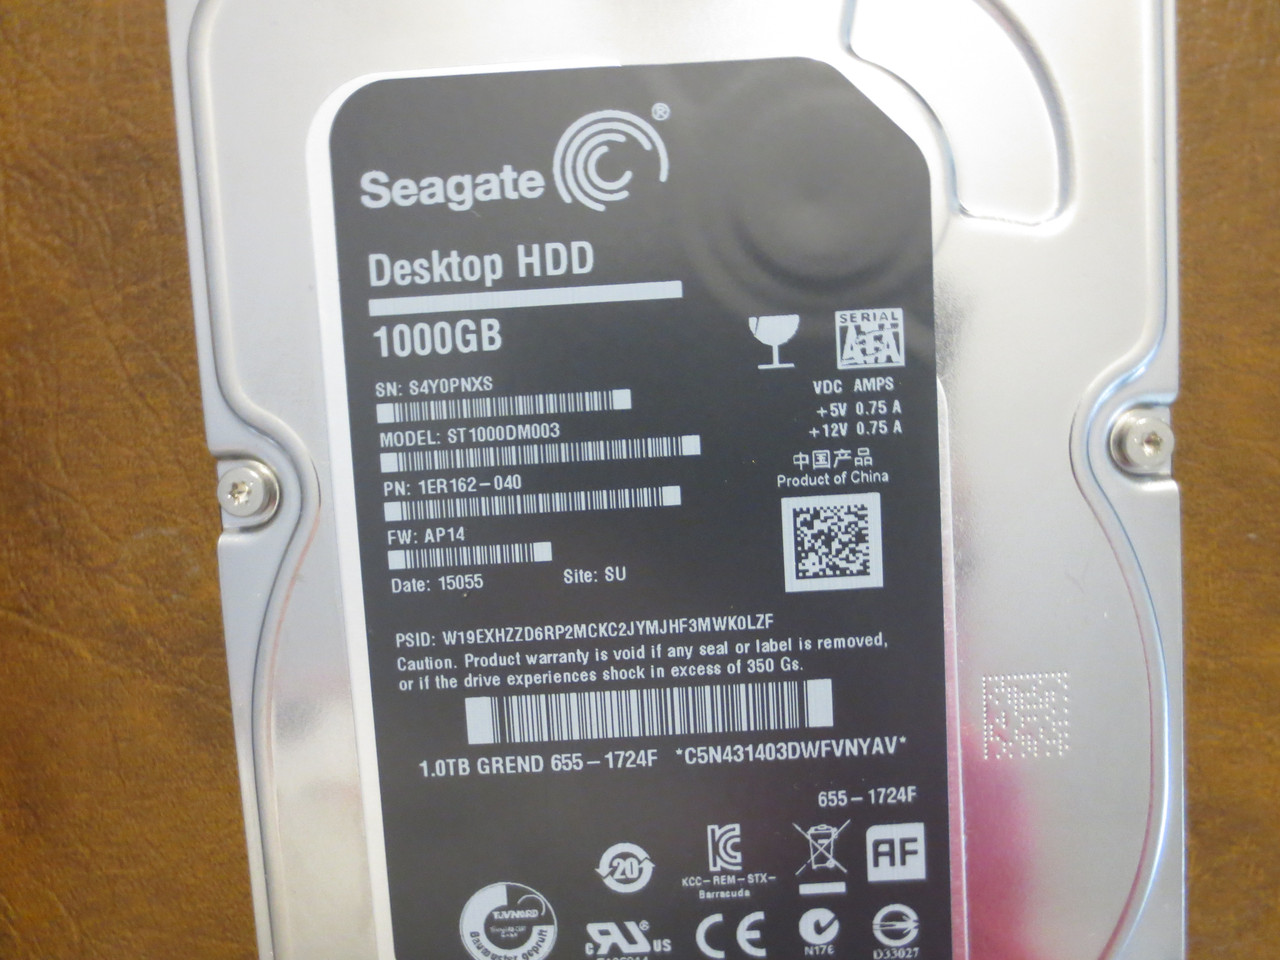 Seagate ST1000DM003 1ER162-040 FW:AP14 SU Apple#655-1724F 1.0TB Sata -  Effective Electronics